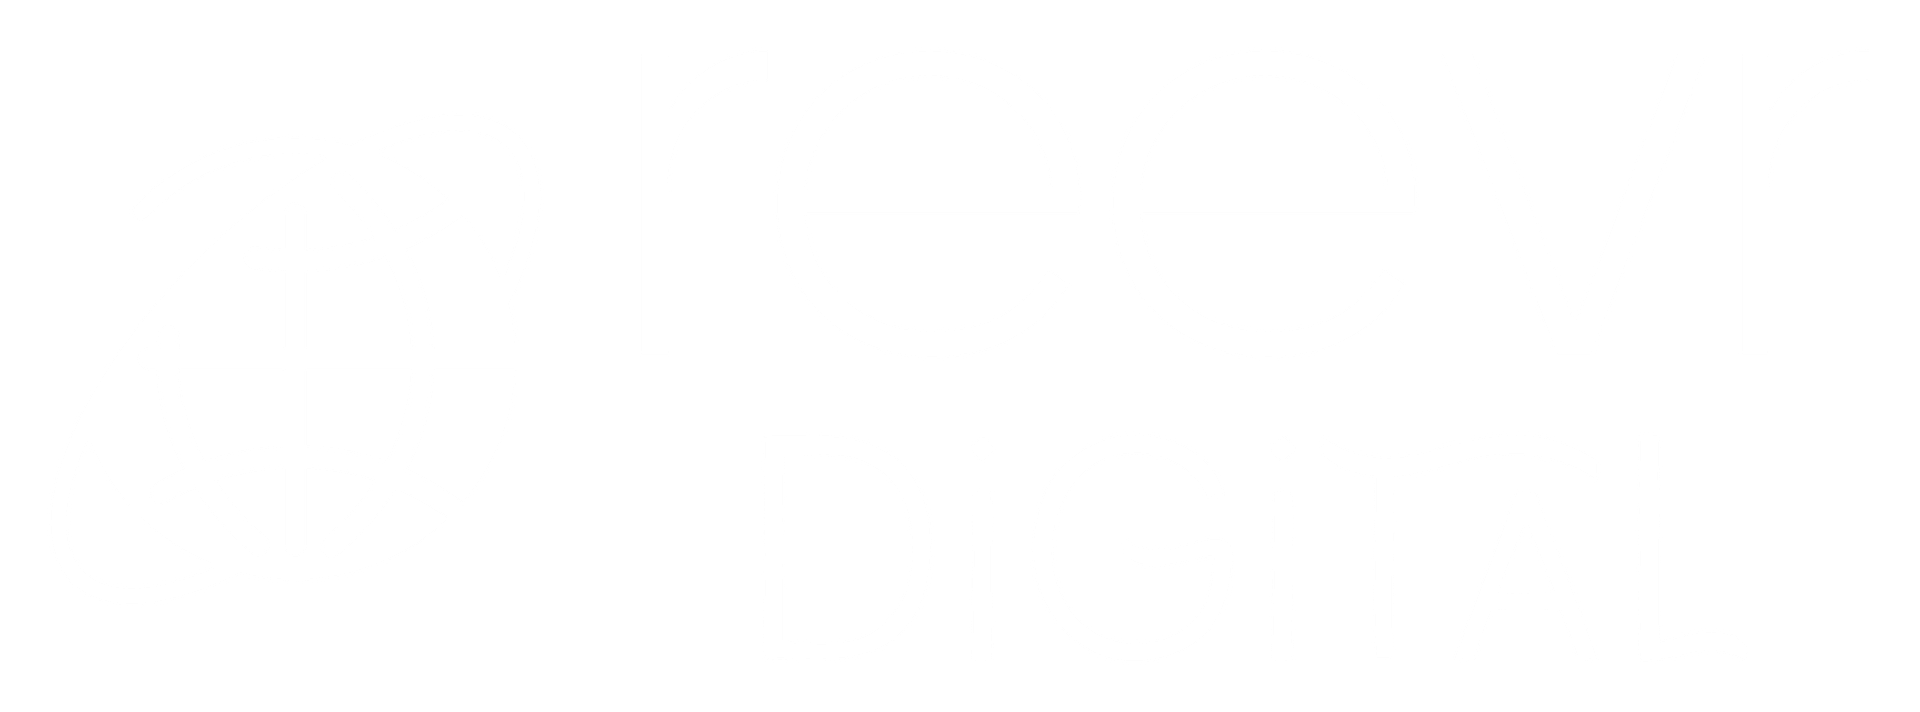 Reevr Digital Logo - White